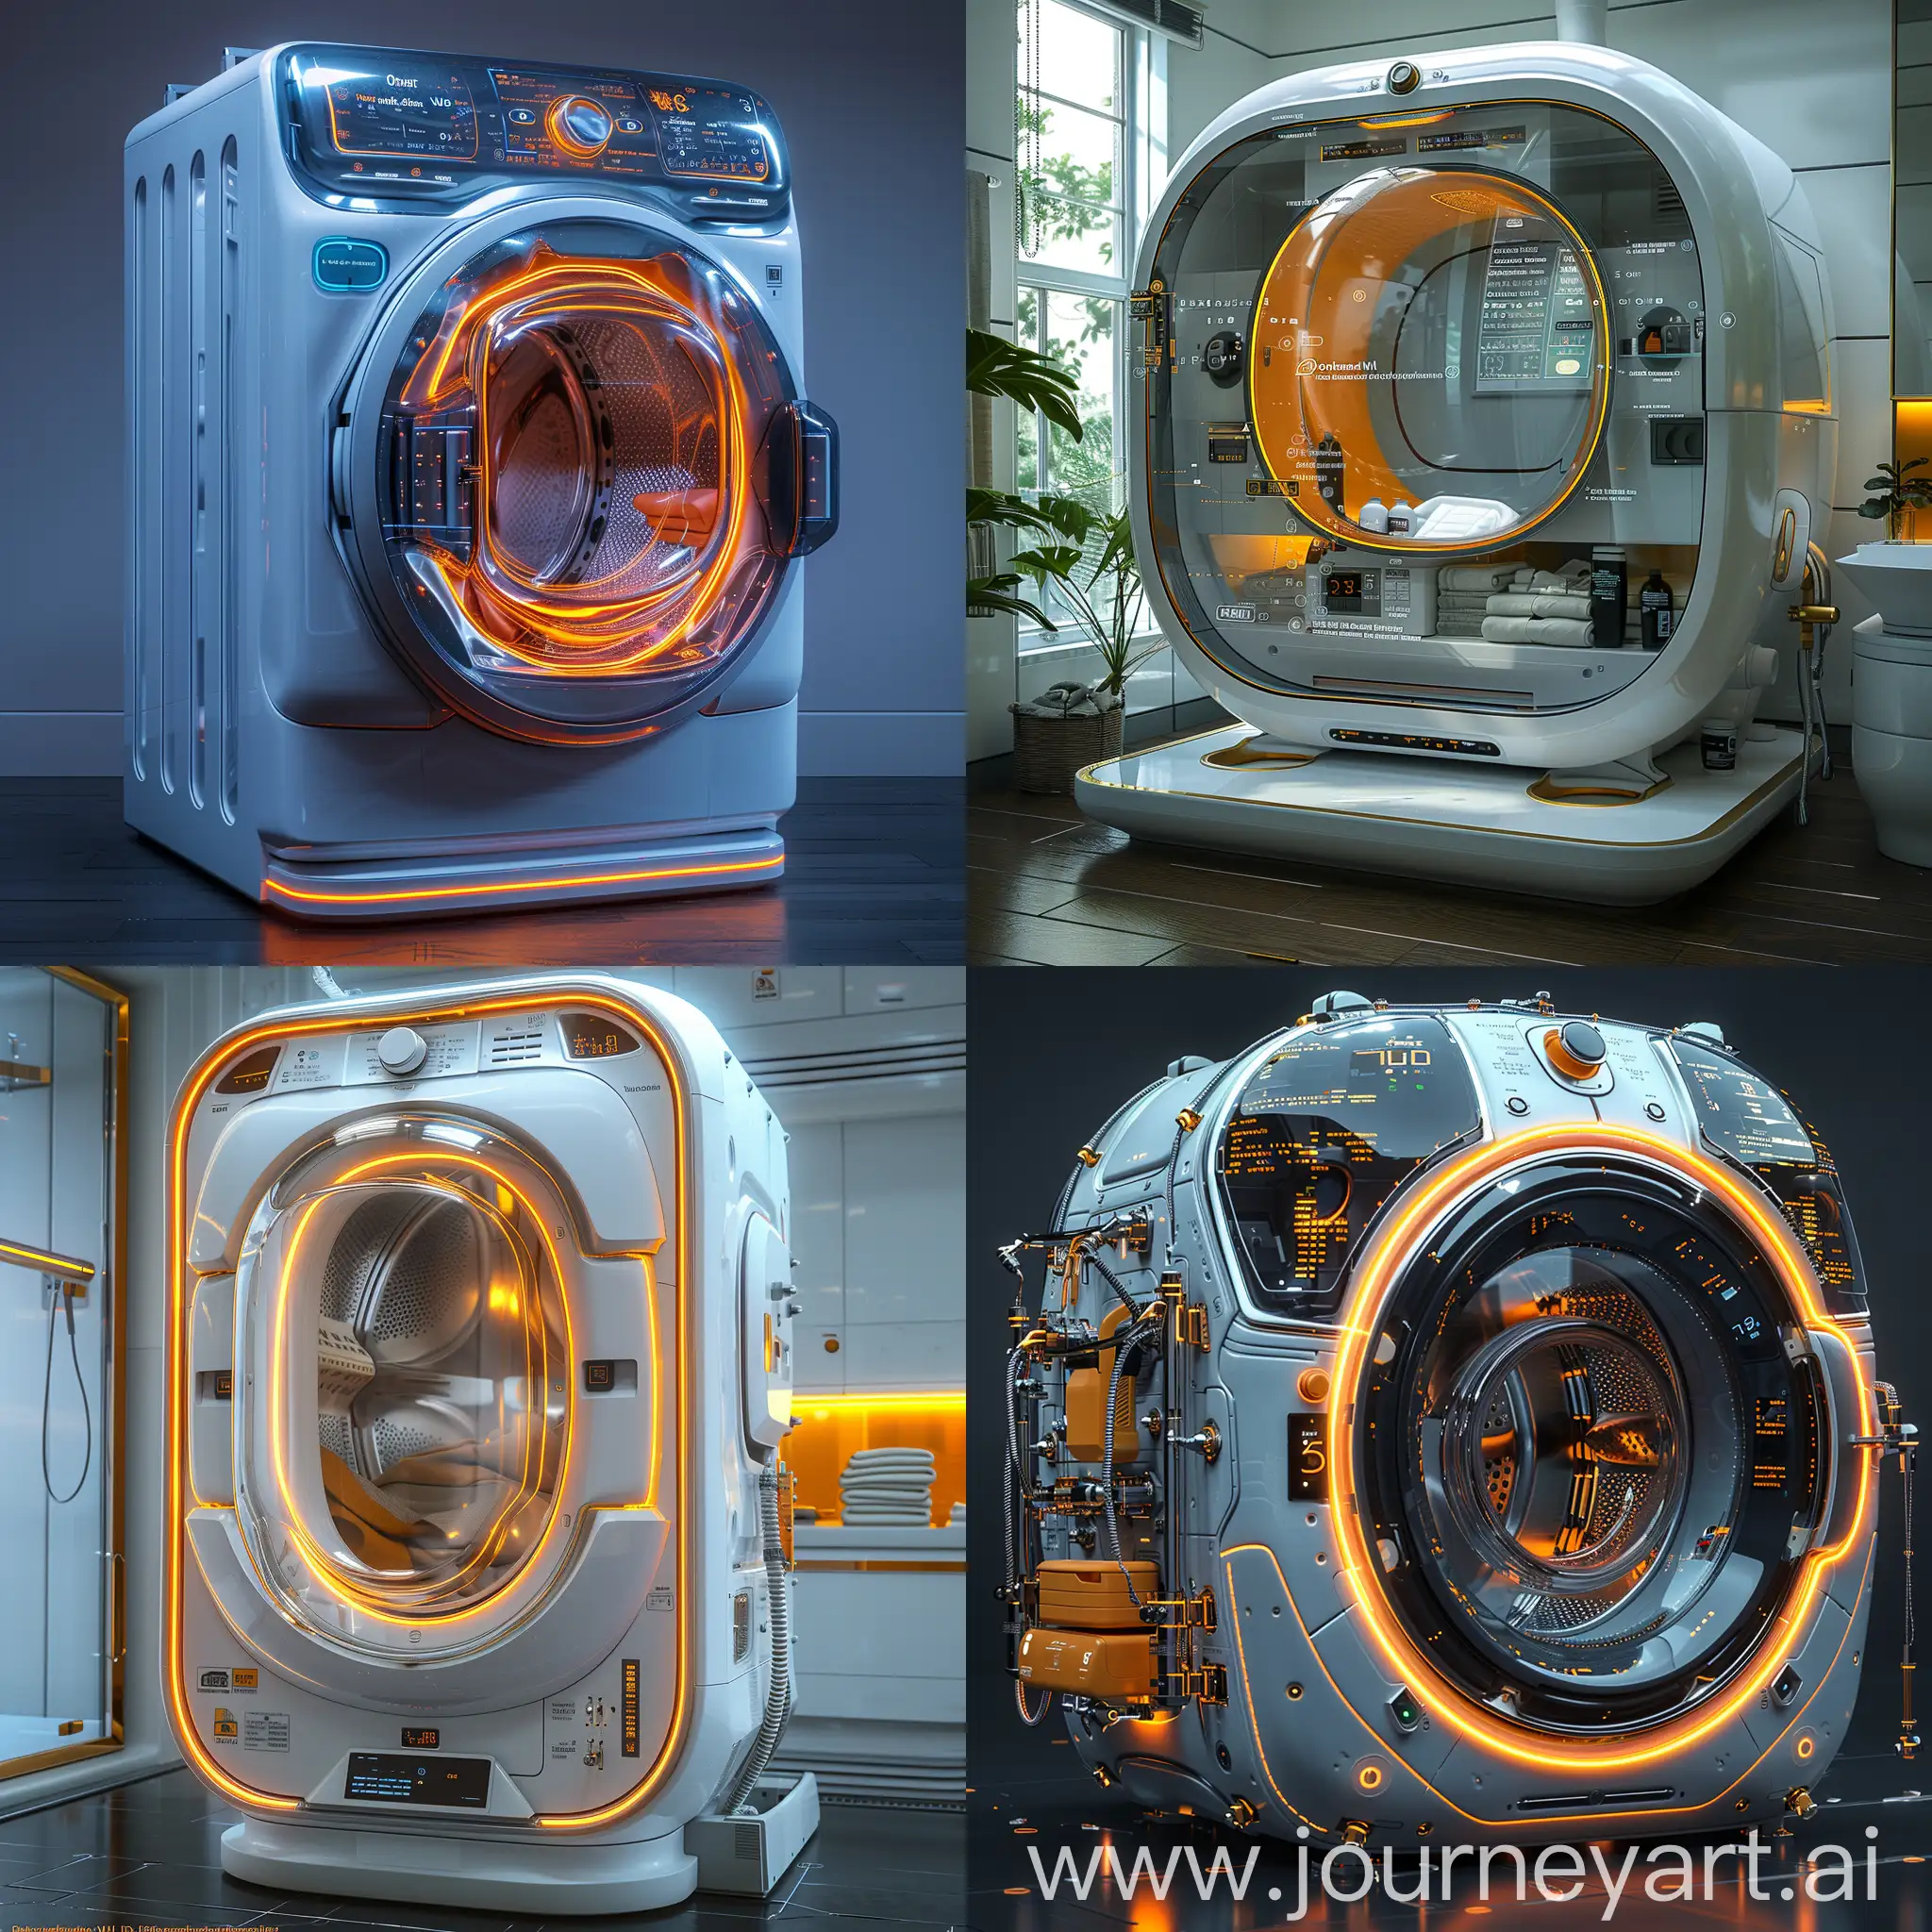 Futuristic-NanoCoated-Drum-Washing-Machine-with-AIPowered-Ozone-Disinfection